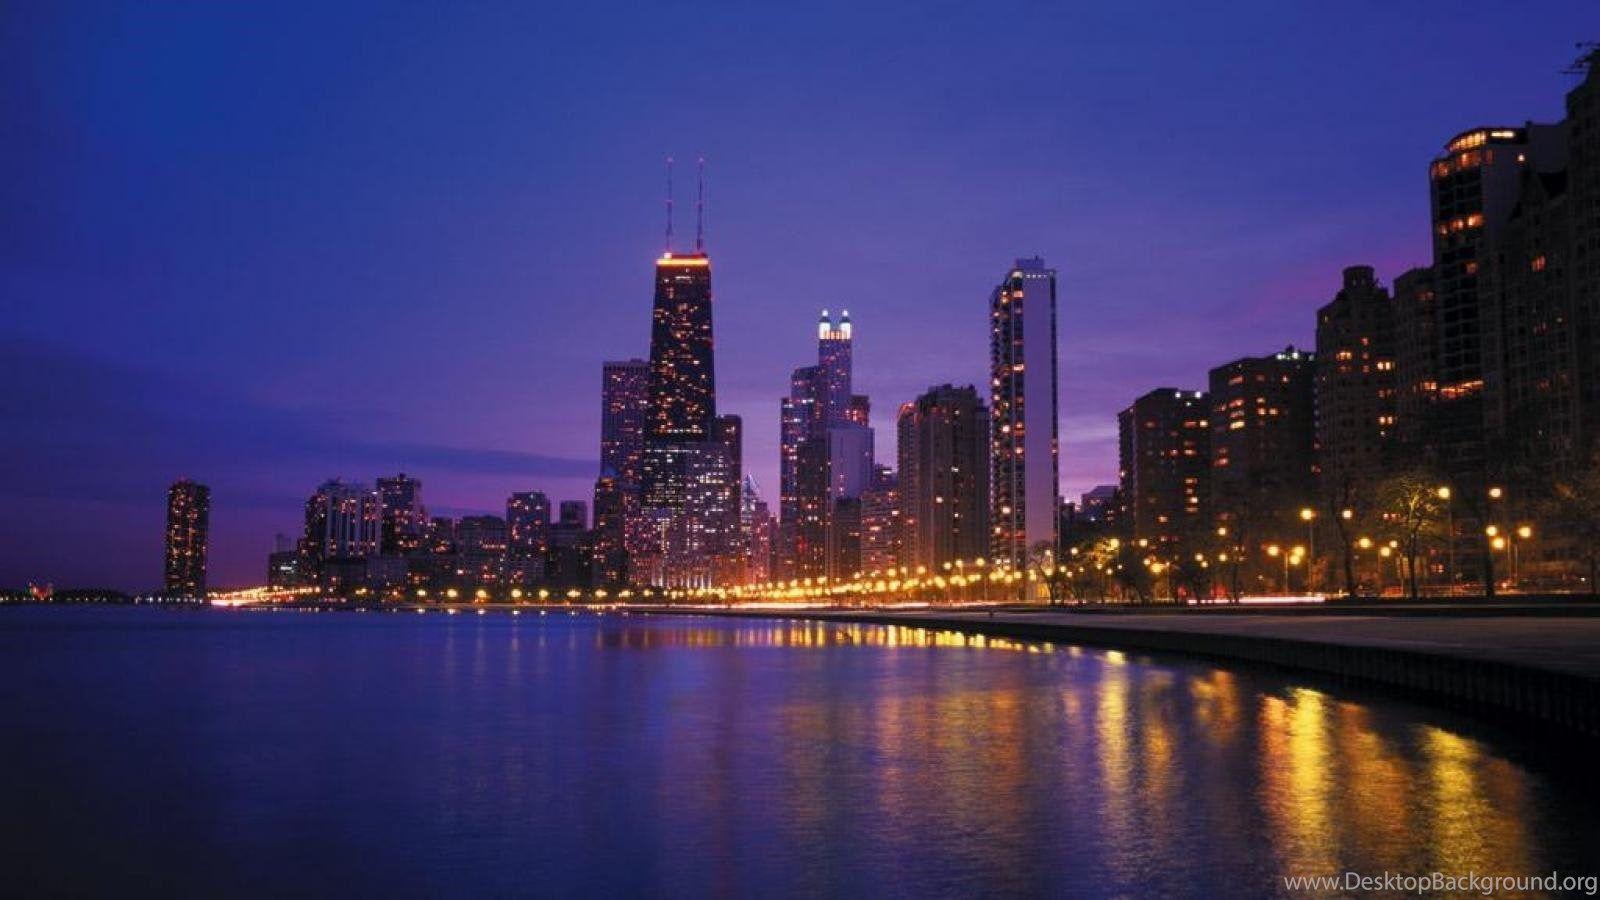 Top Chicago Skyline At Night Wallpaper Image For Desktop